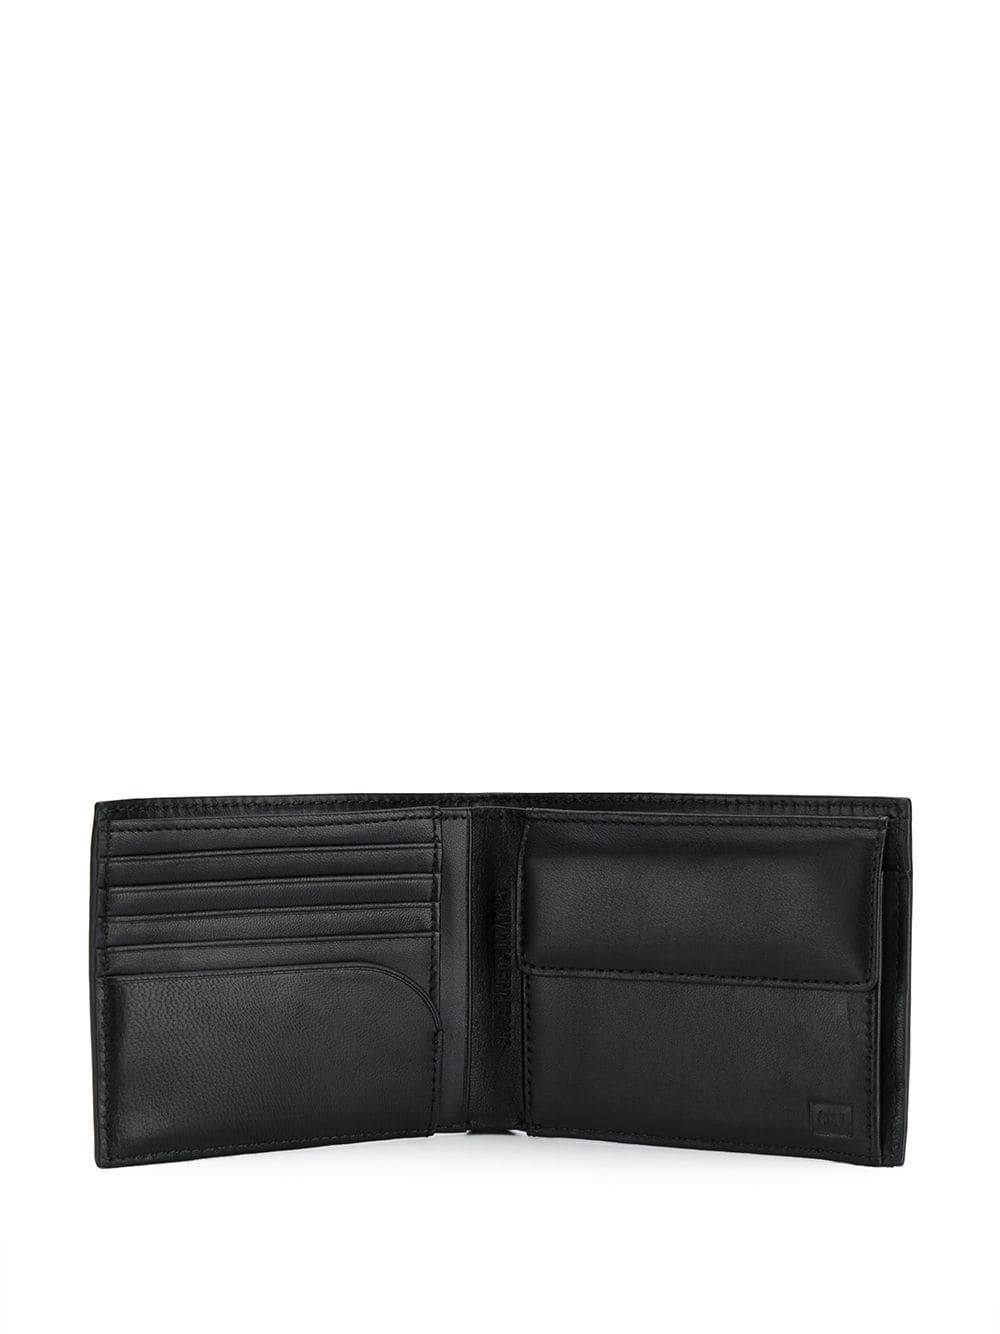 Calvin Klein Black Wallet in Black for Men - Lyst